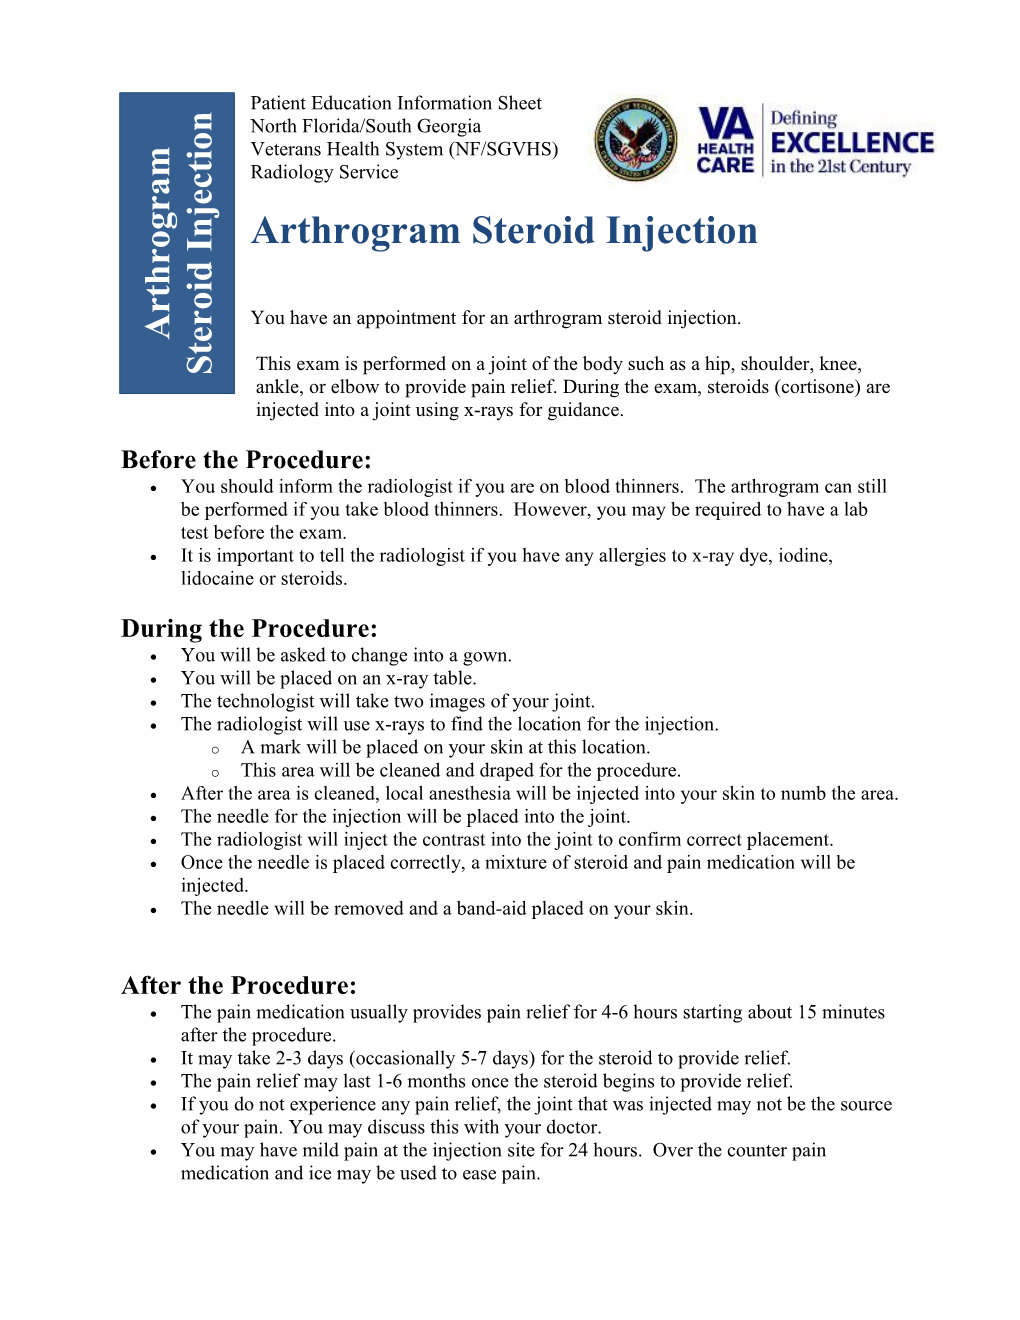 Arthrogram Steroid Injection